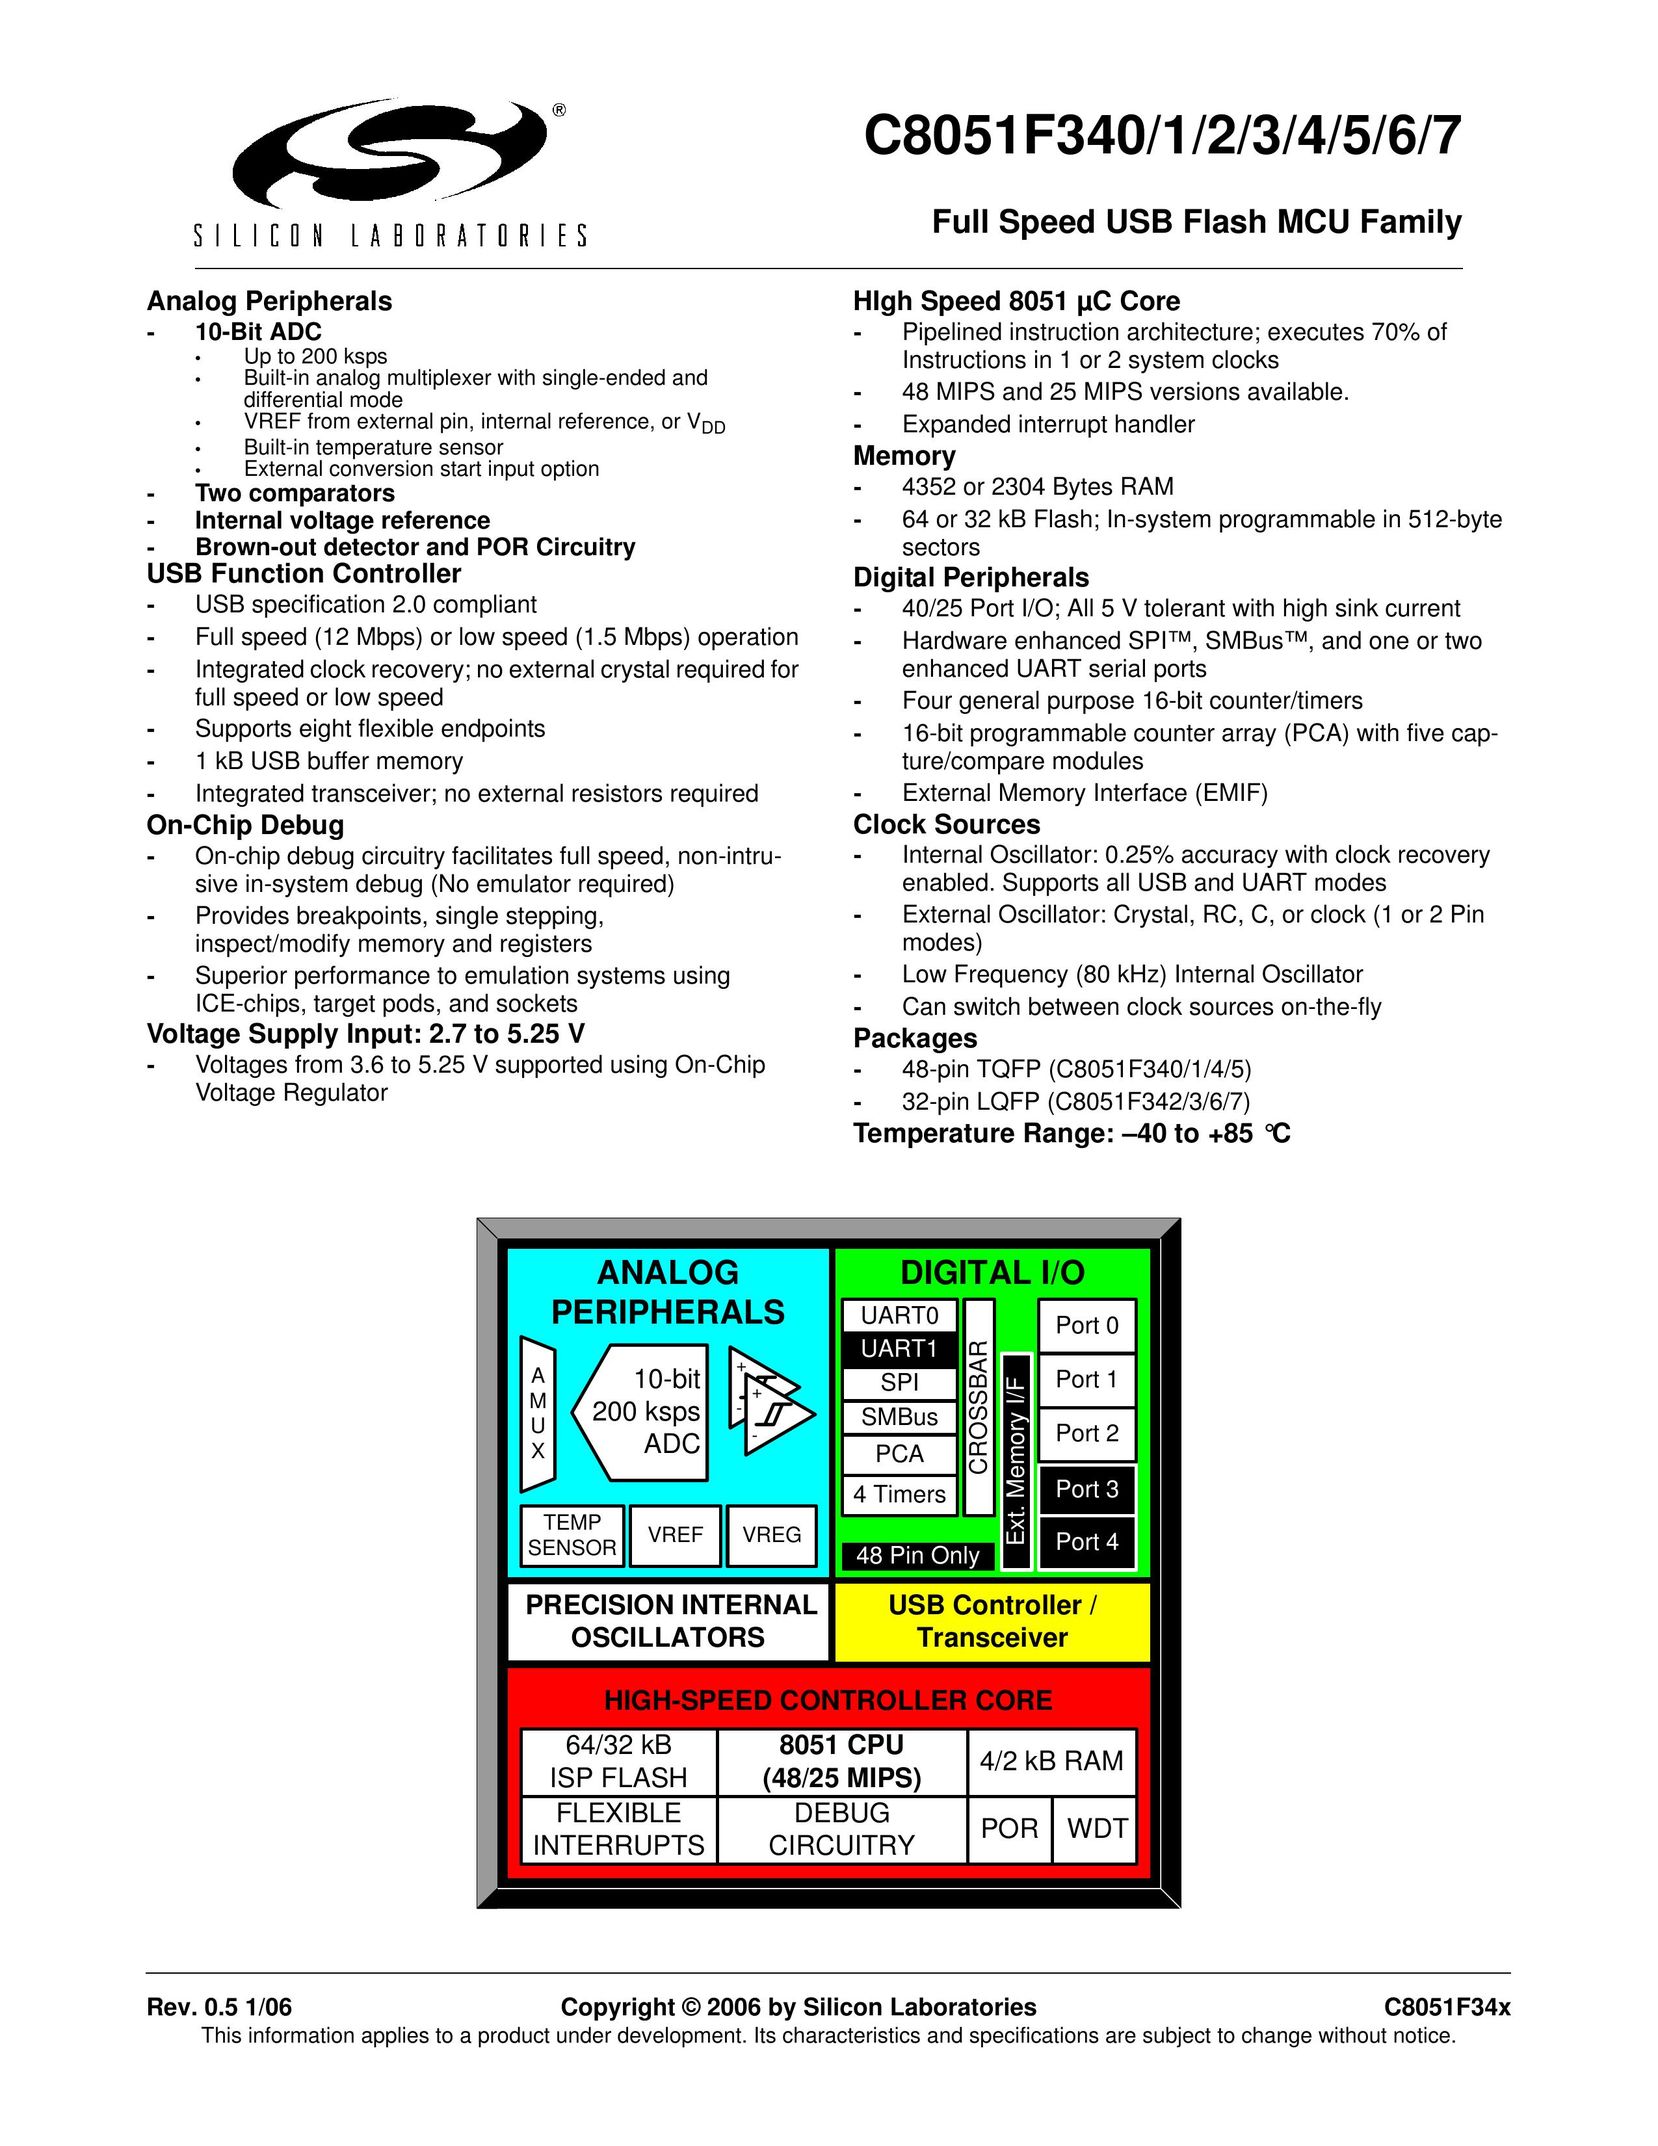 Silicon Laboratories C8051F340 Two-Way Radio User Manual